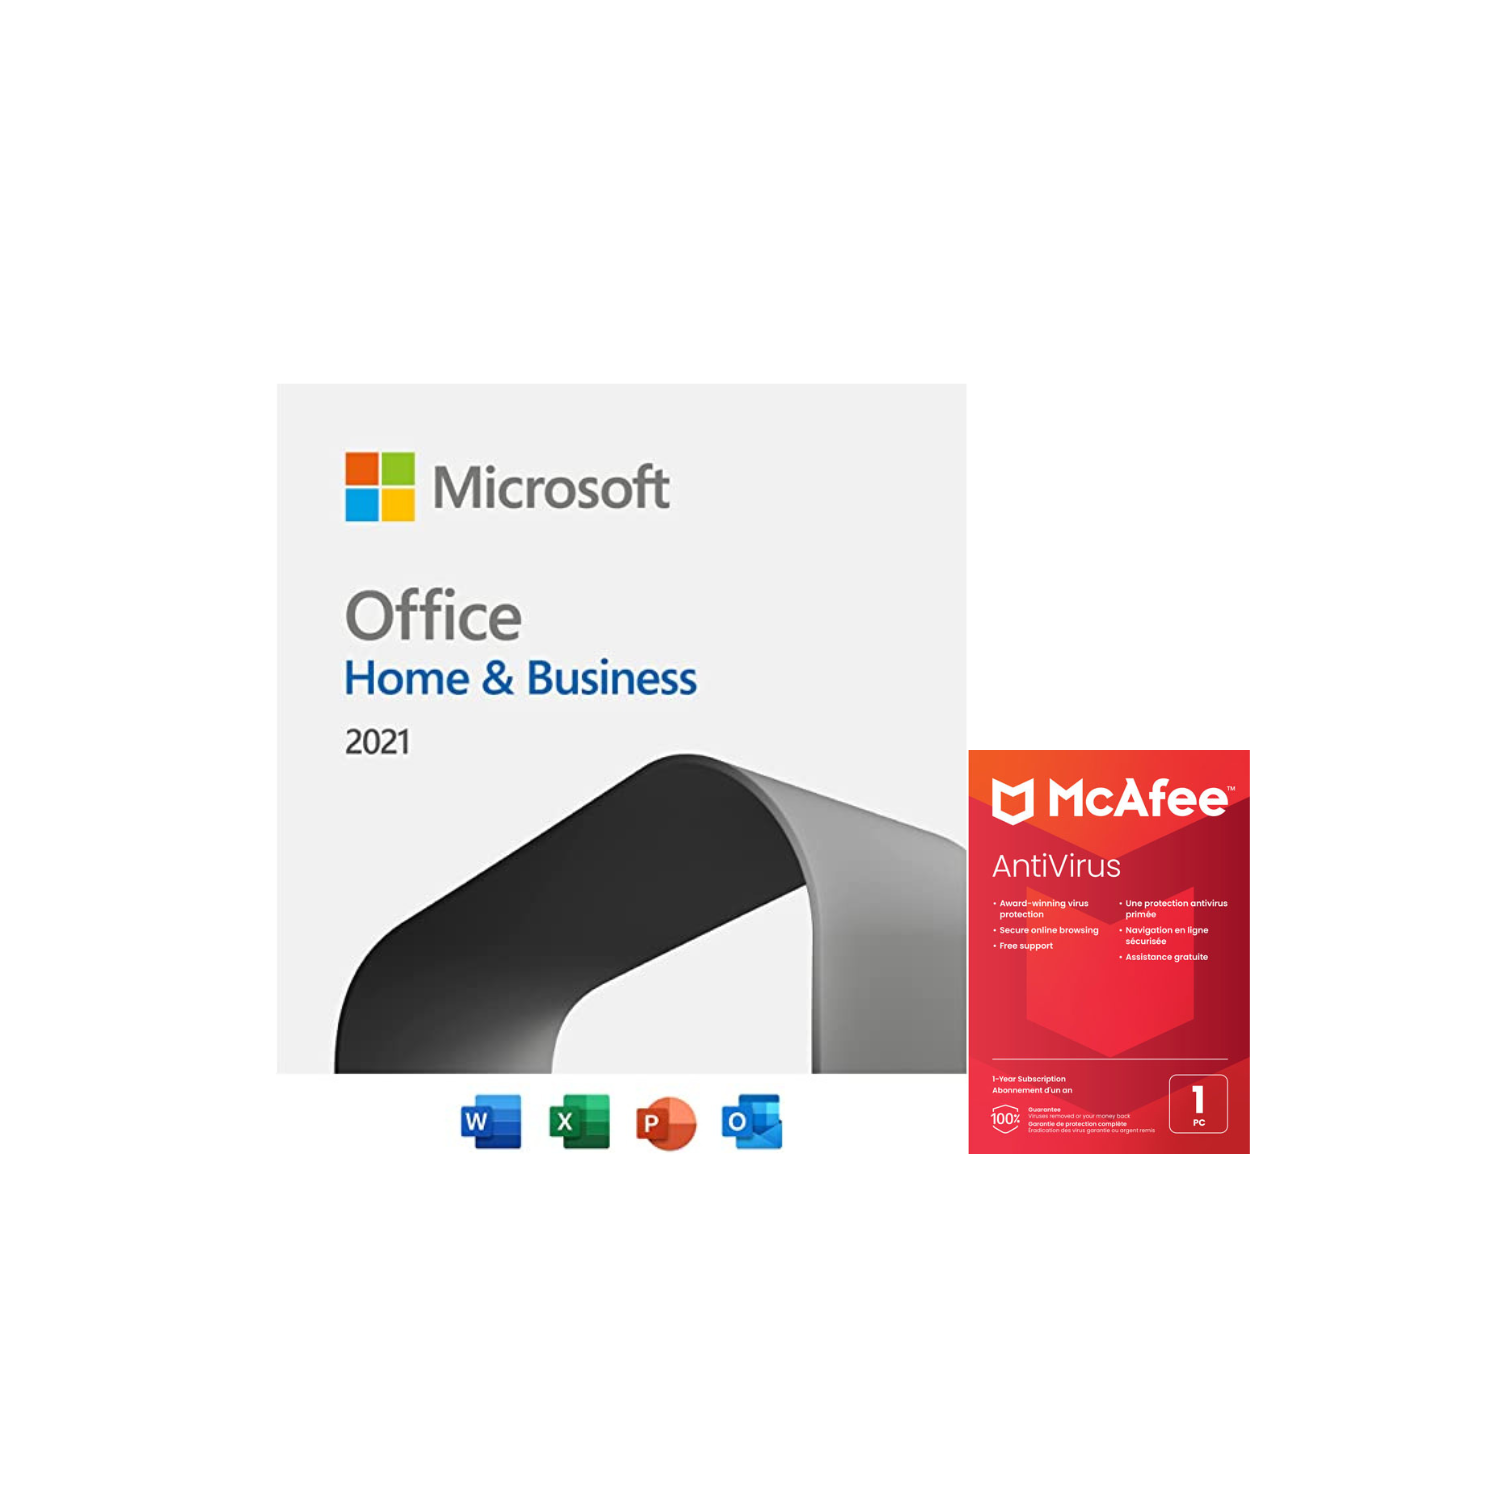 Microsoft Office Home & Business 2021 (PC/Mac) & McAfee AntiVirus Combo | 1 User | Digital Download